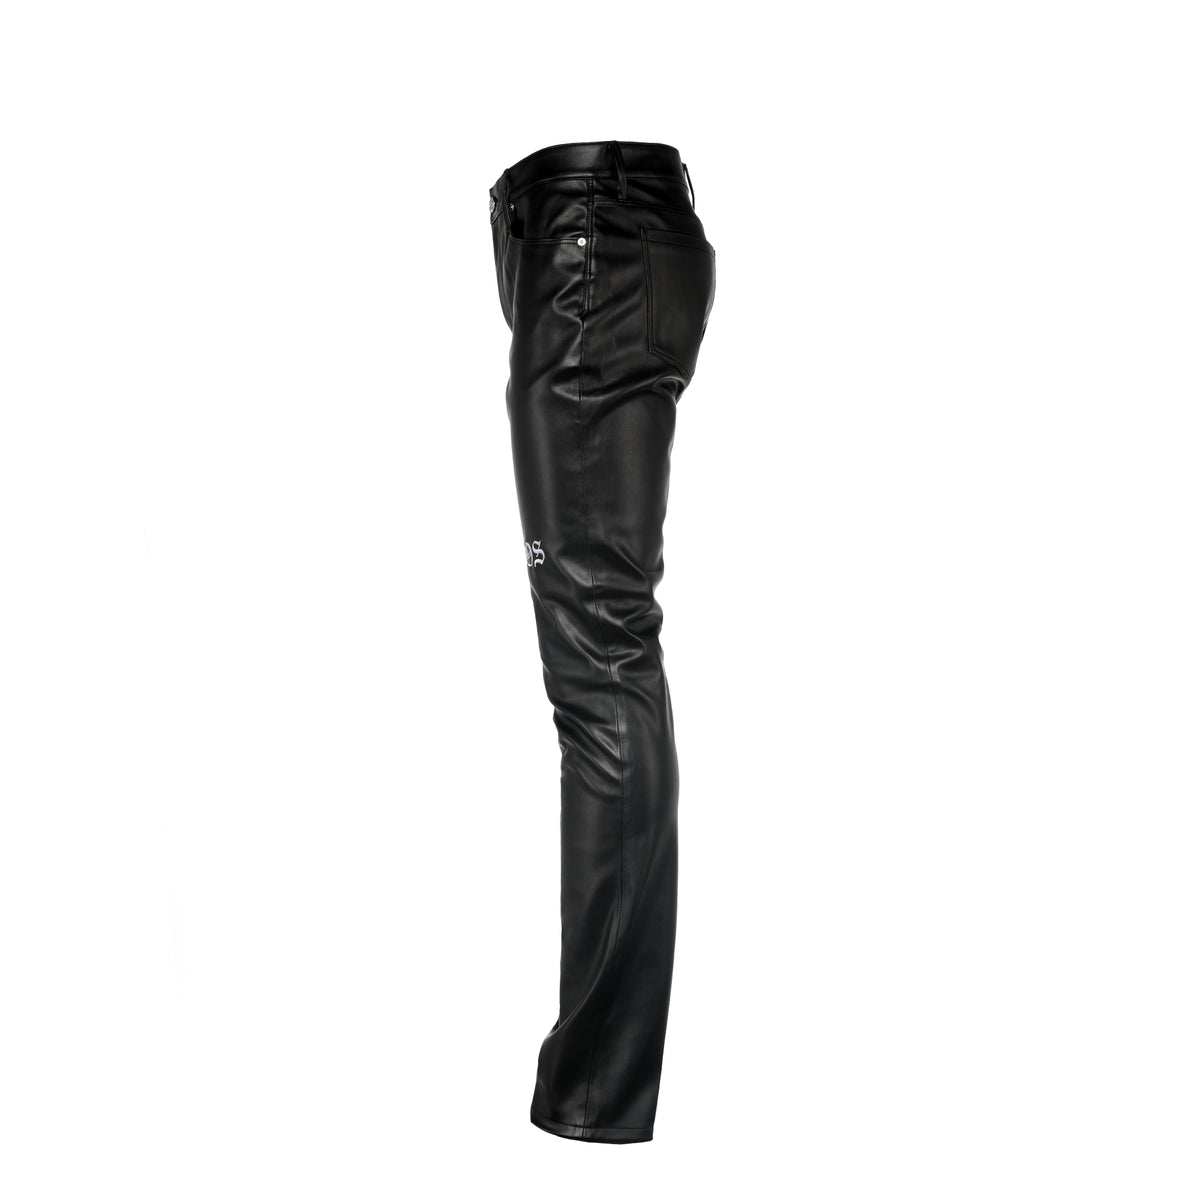 RtA Brand Vegan Leather Men's Skinny Pants - SIZE Boutique